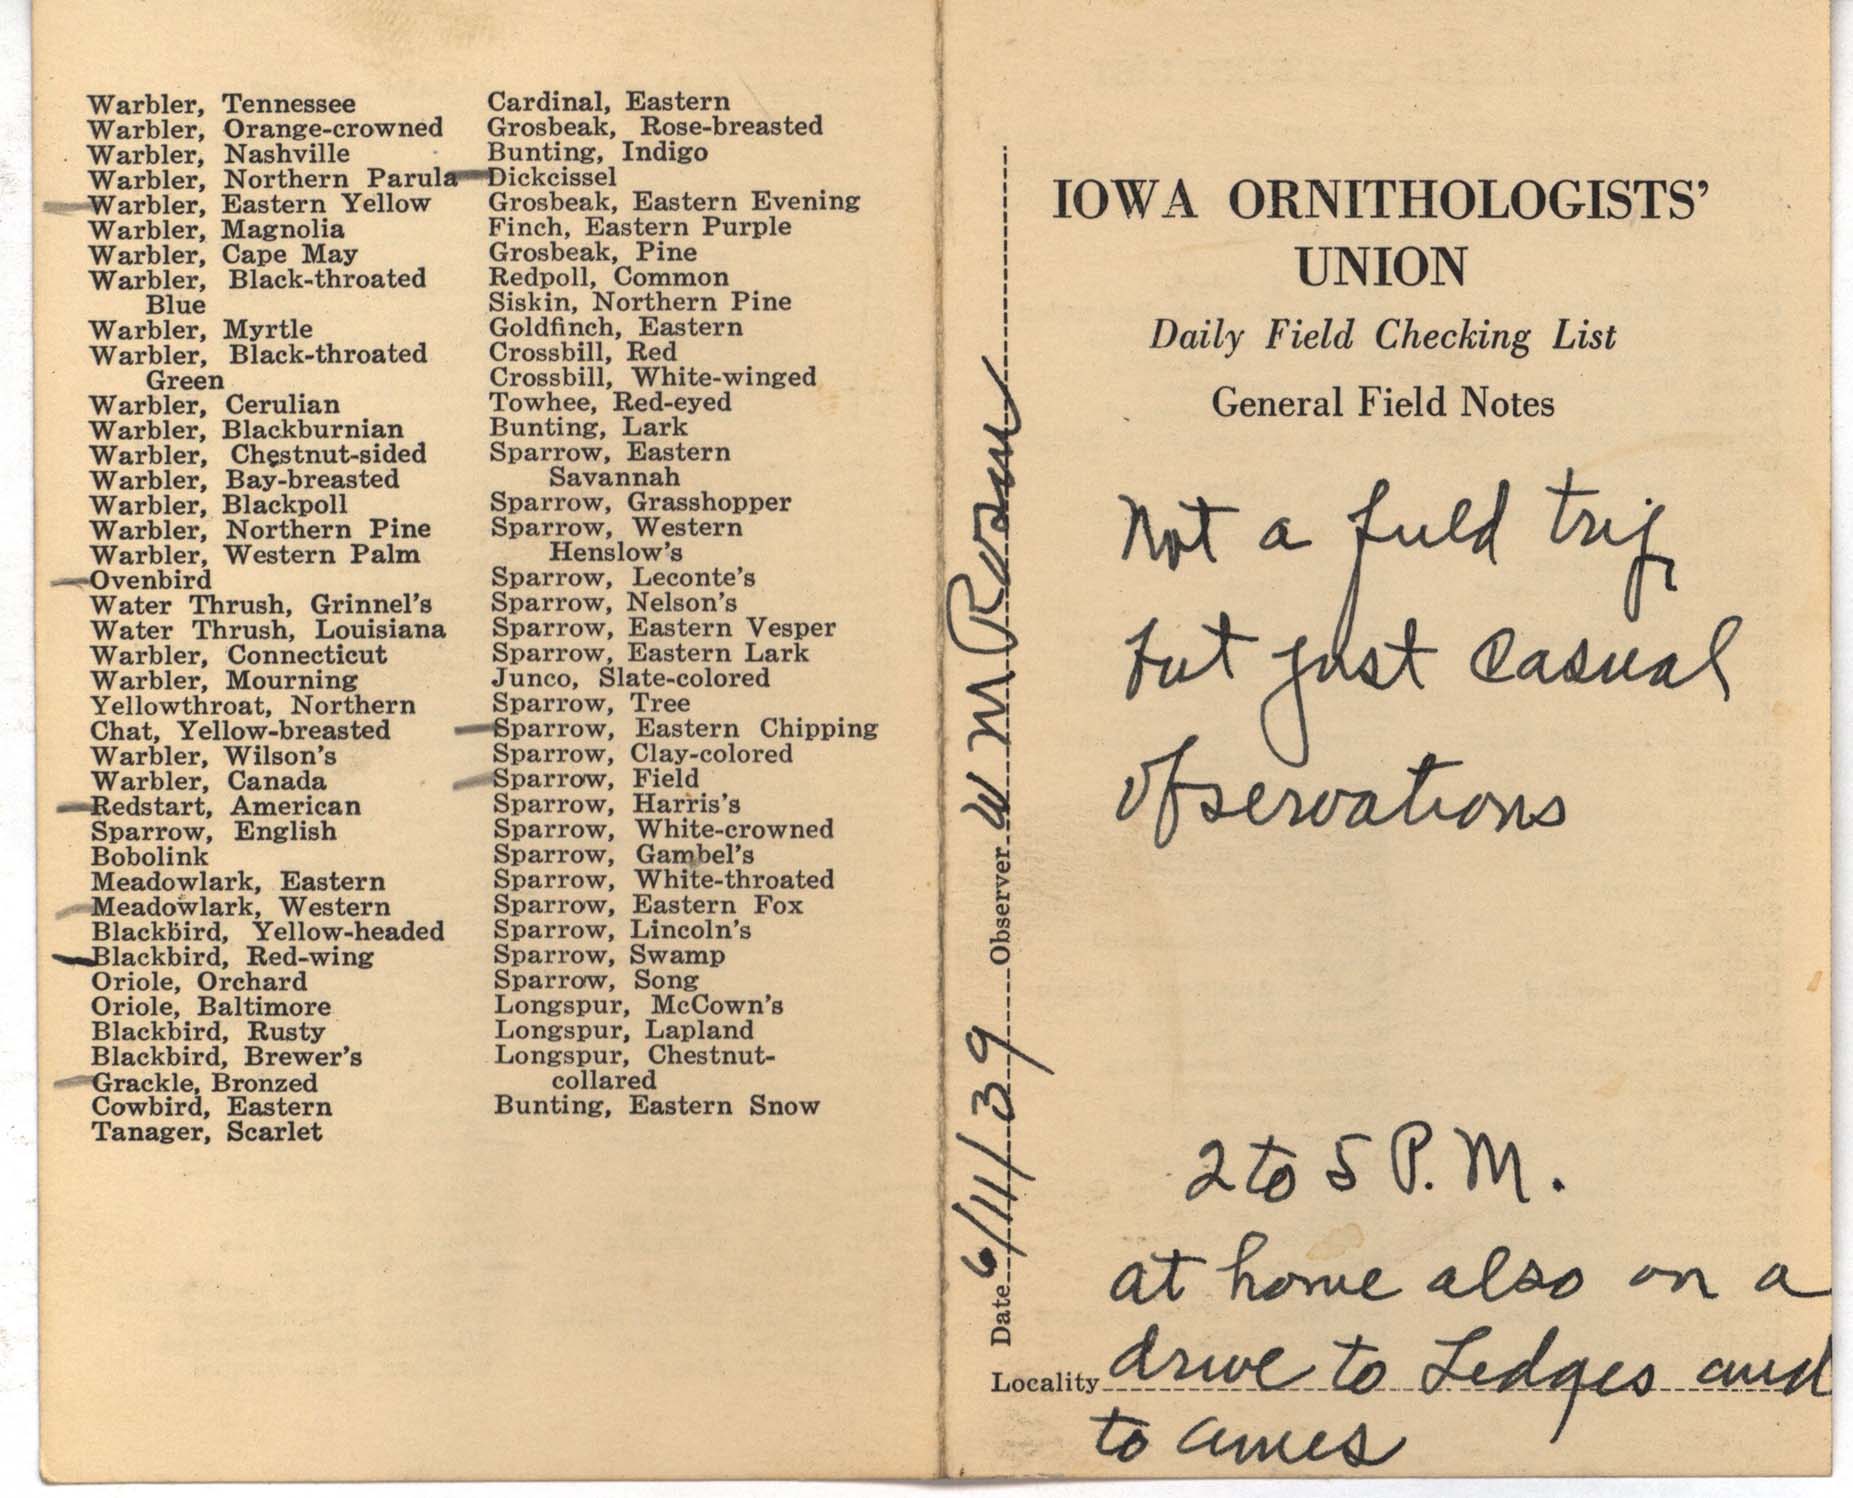 Daily field checking list by Walter Rosene, June 11, 1939